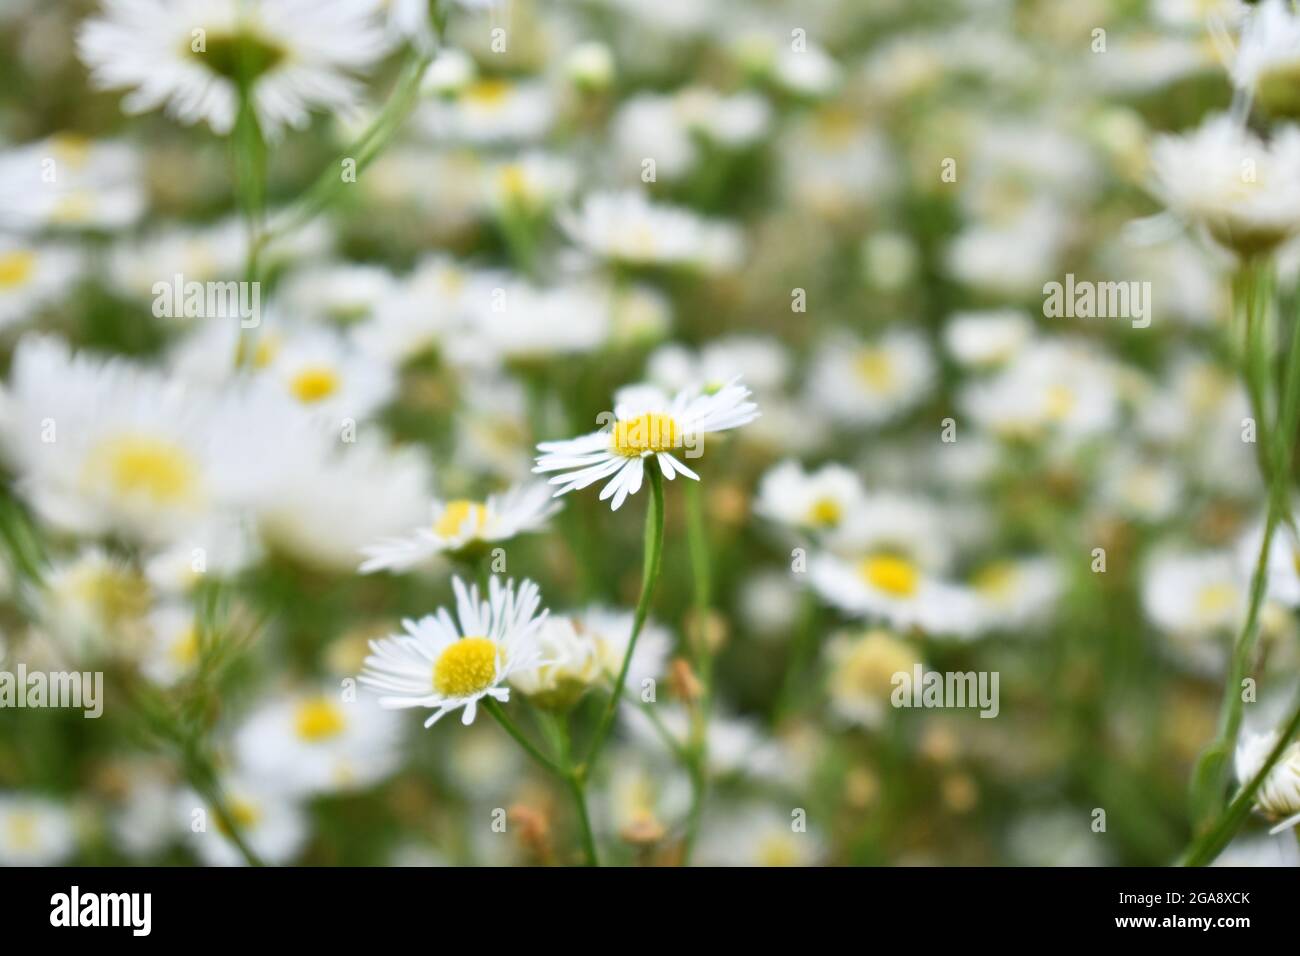 A field of white daisy fleabane (Erigeron annuus) flowers Stock Photo